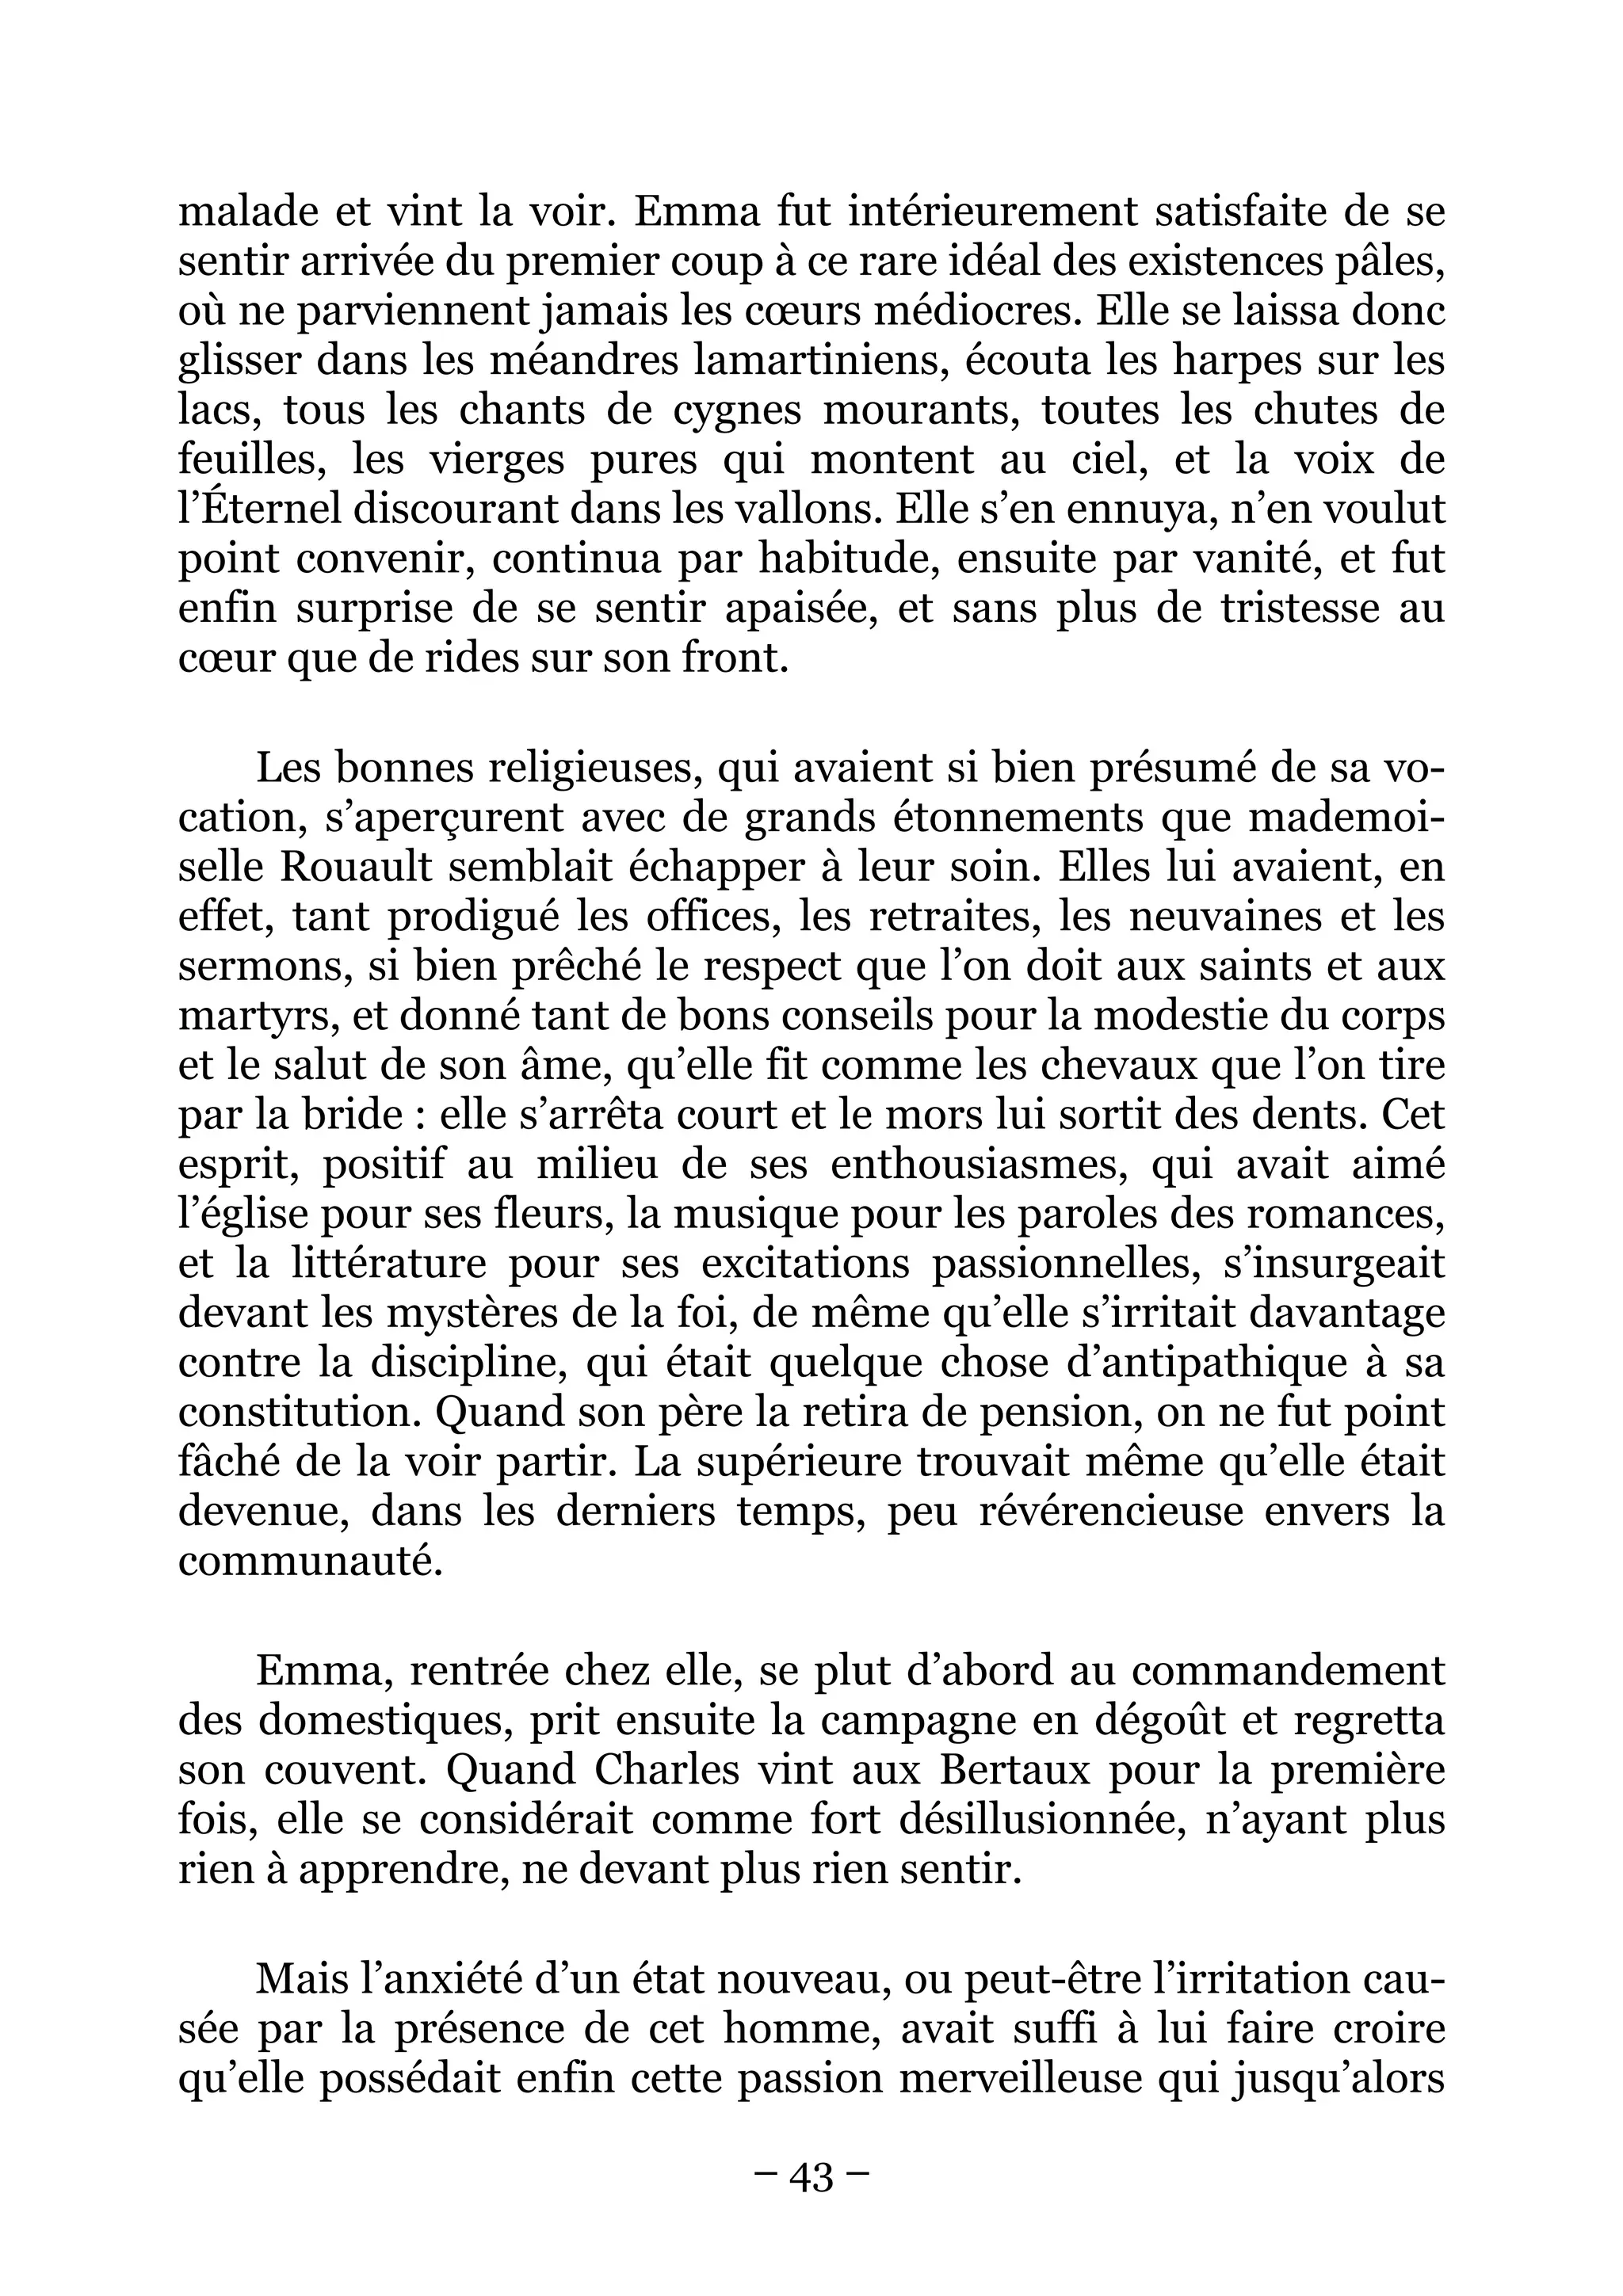 Gustave flaubert madame bovary